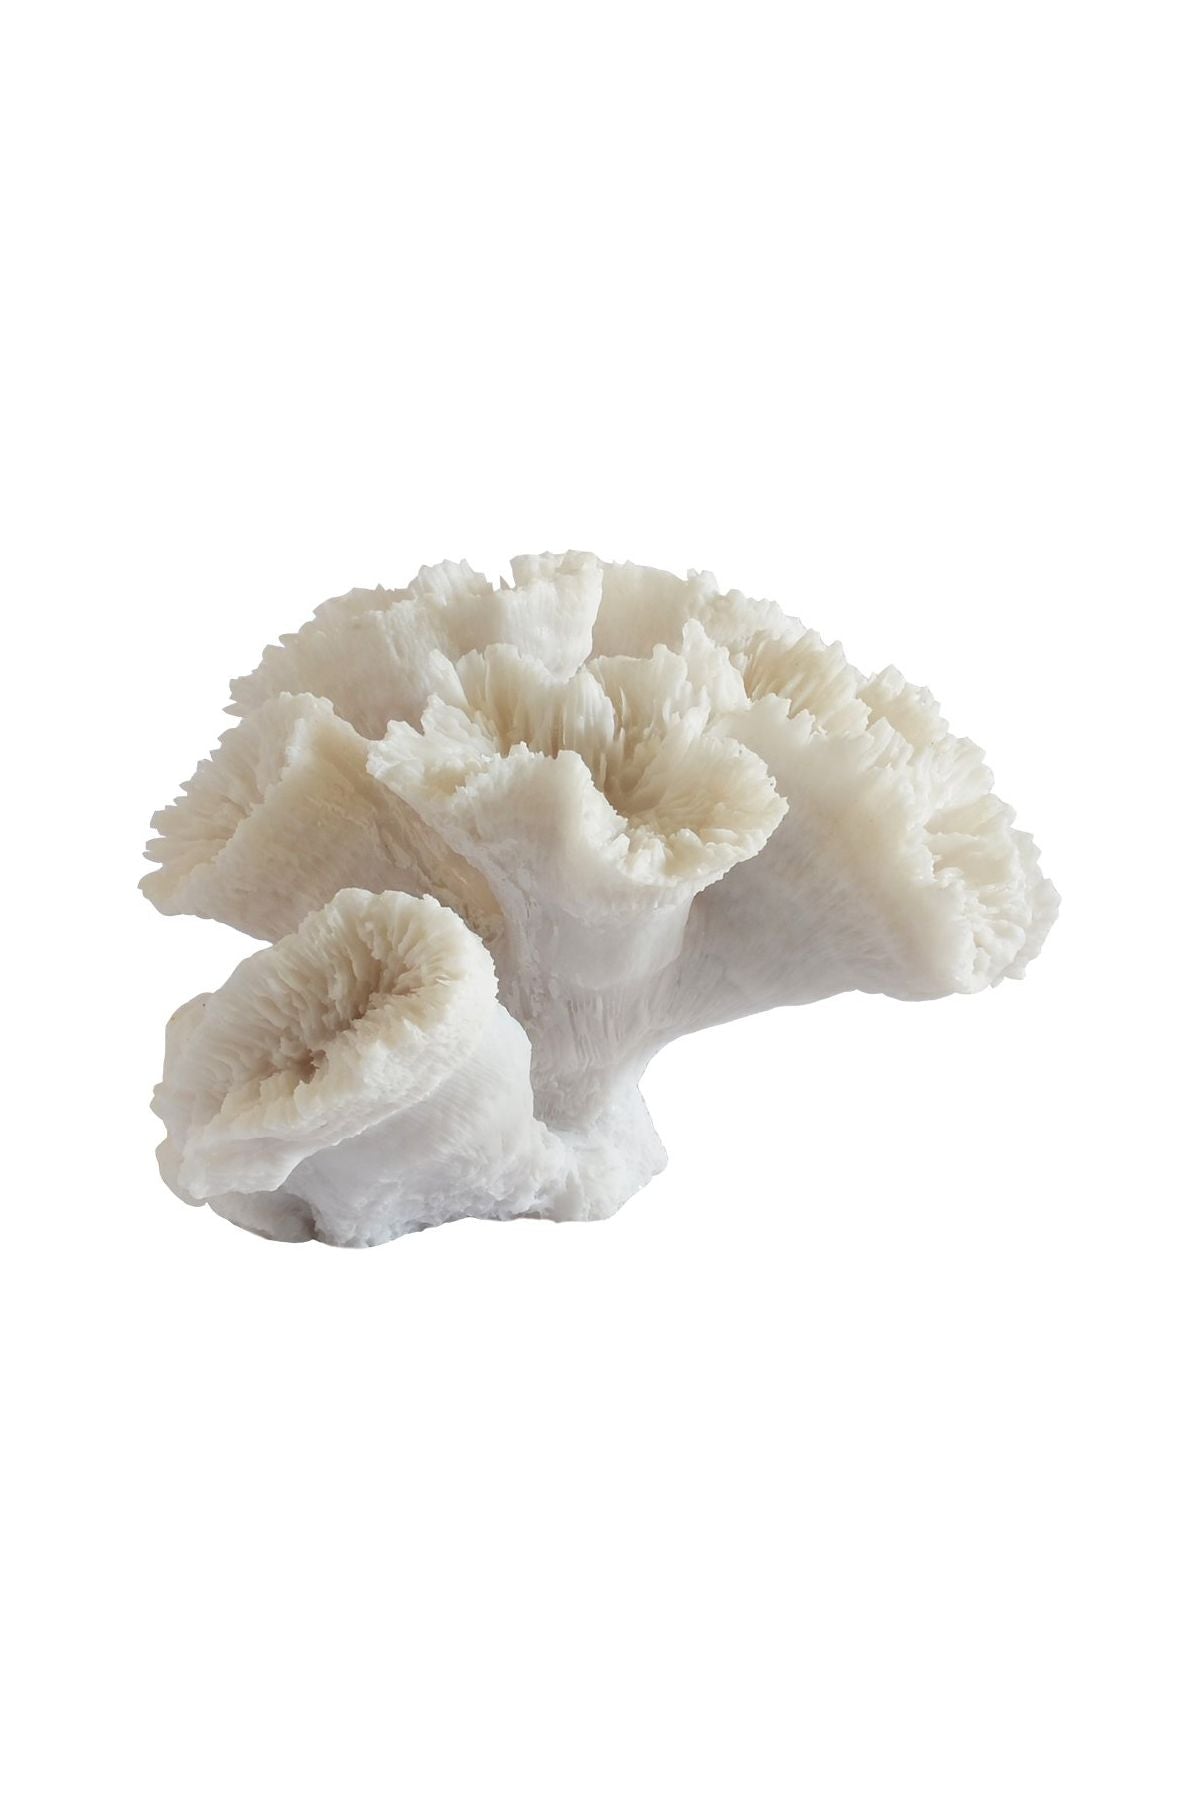 Seaflower coral